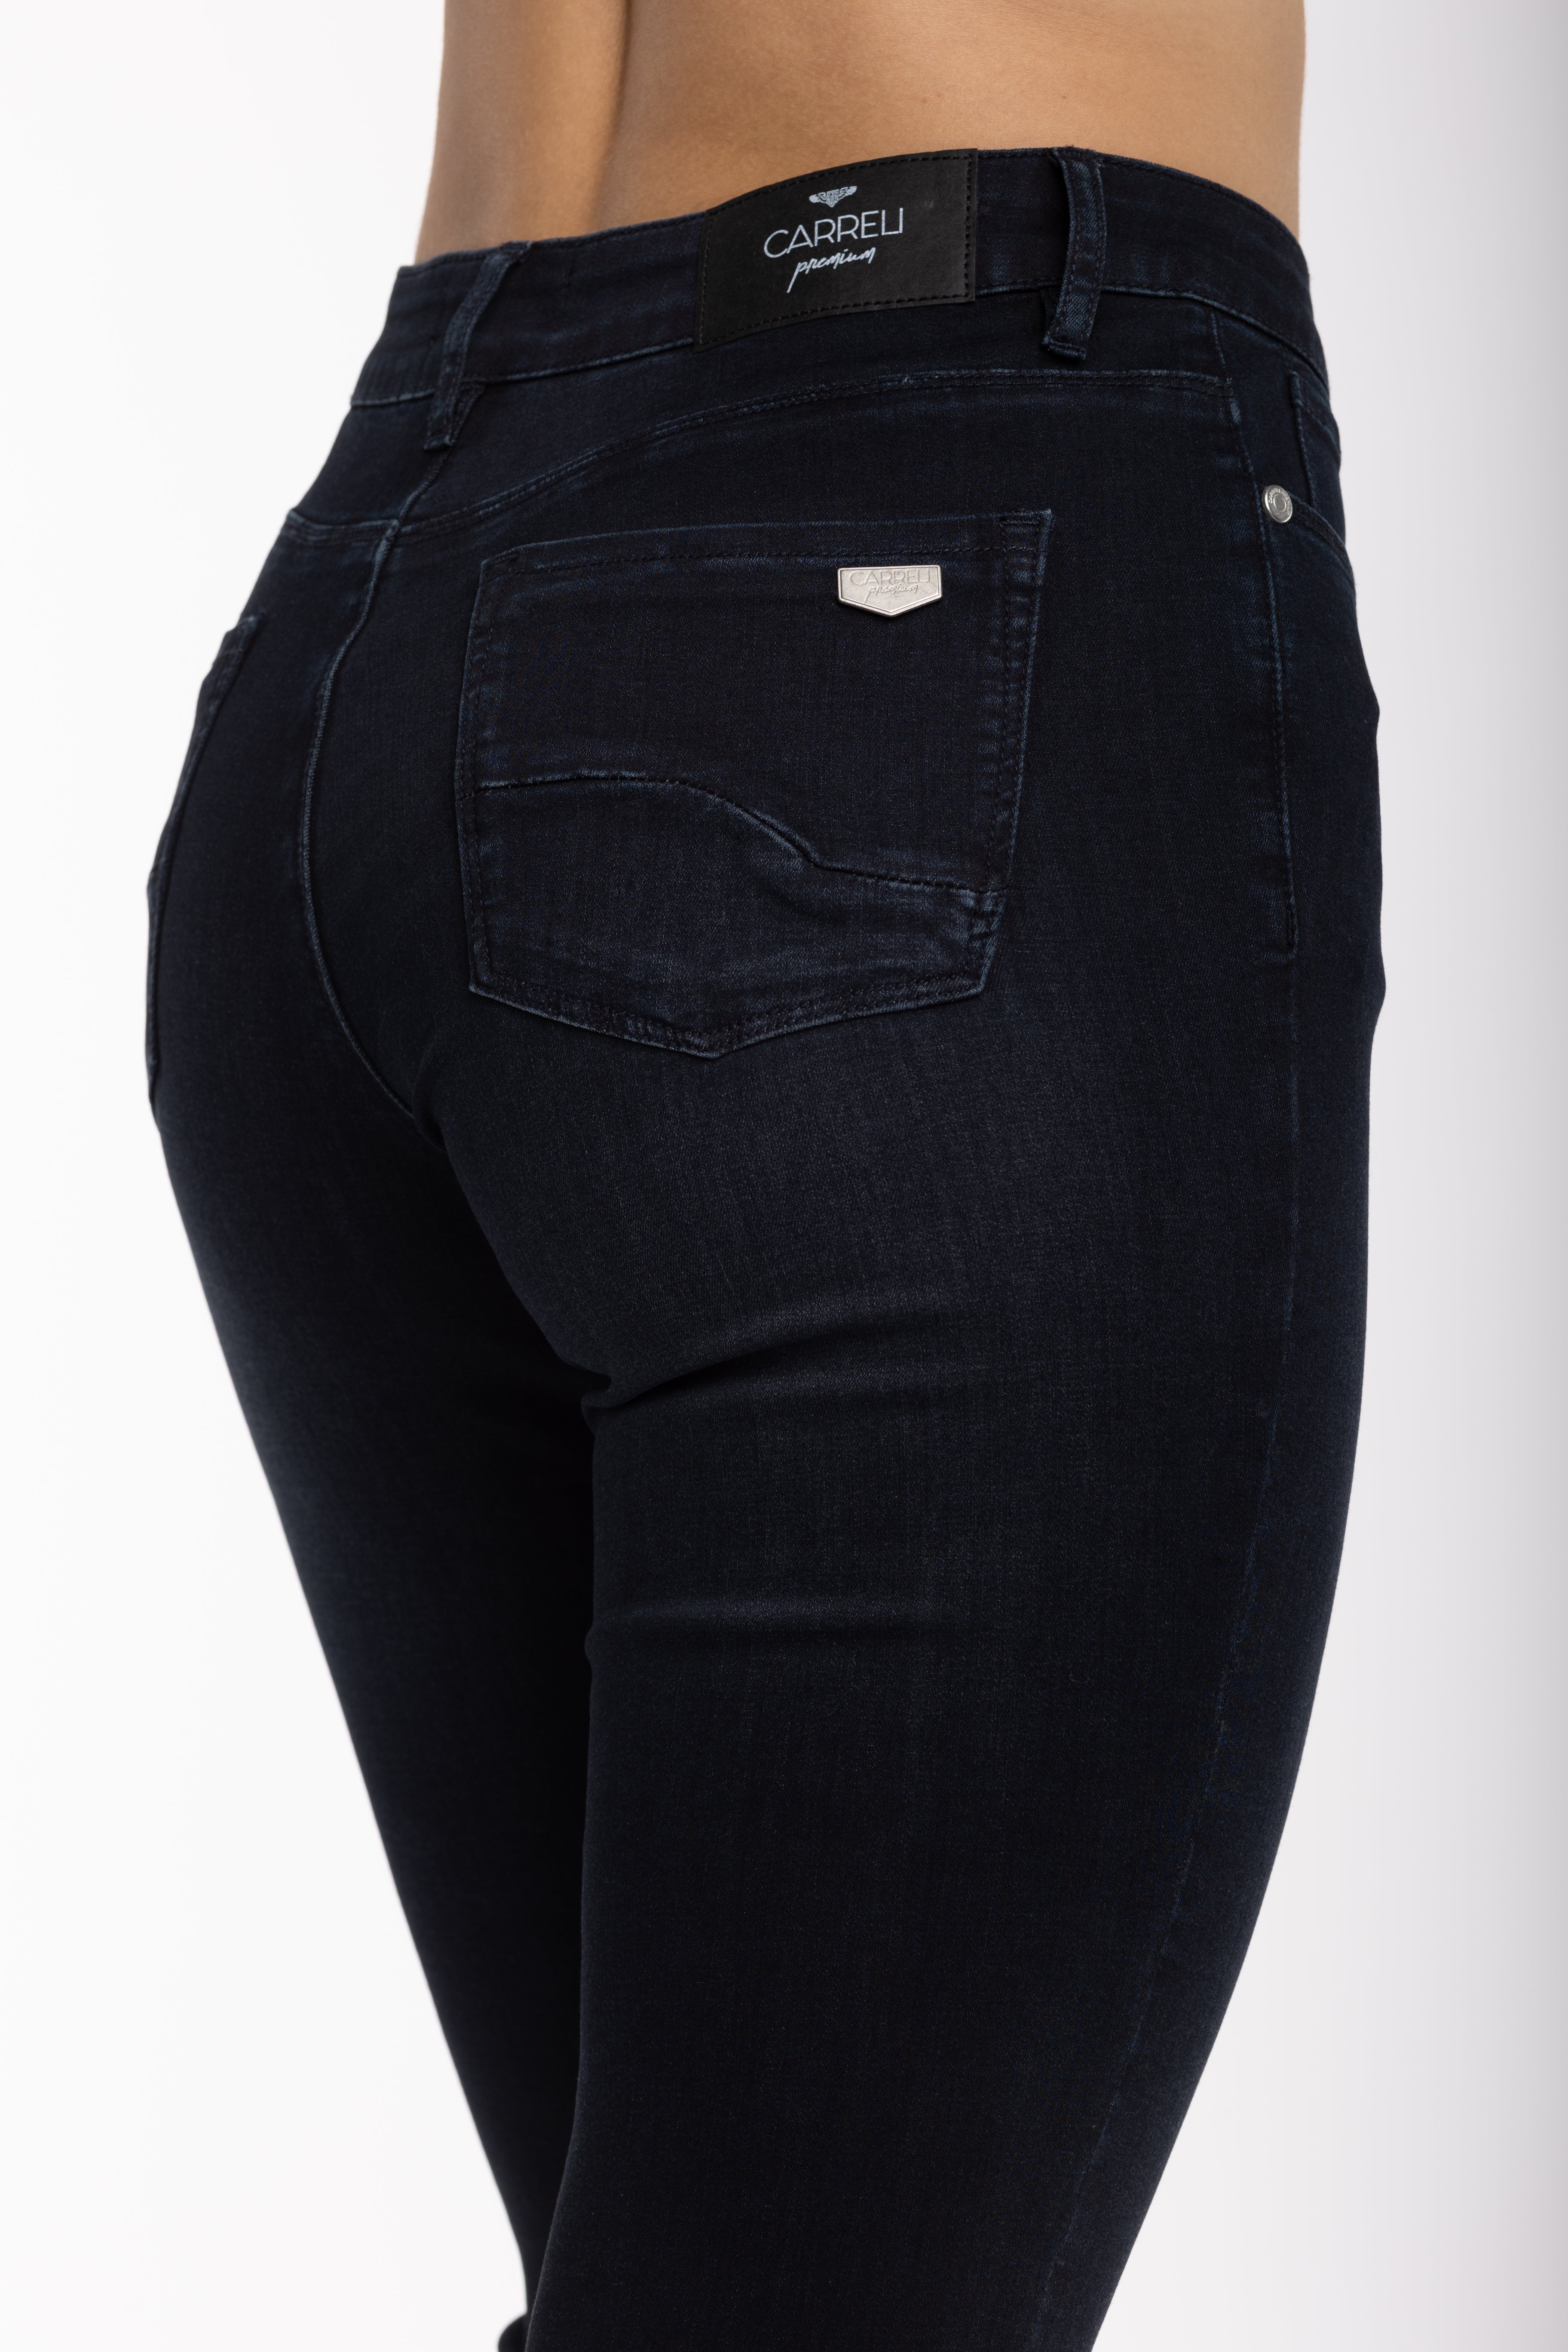 Angela Premium Skinny Jeans in Blasted Black Wash